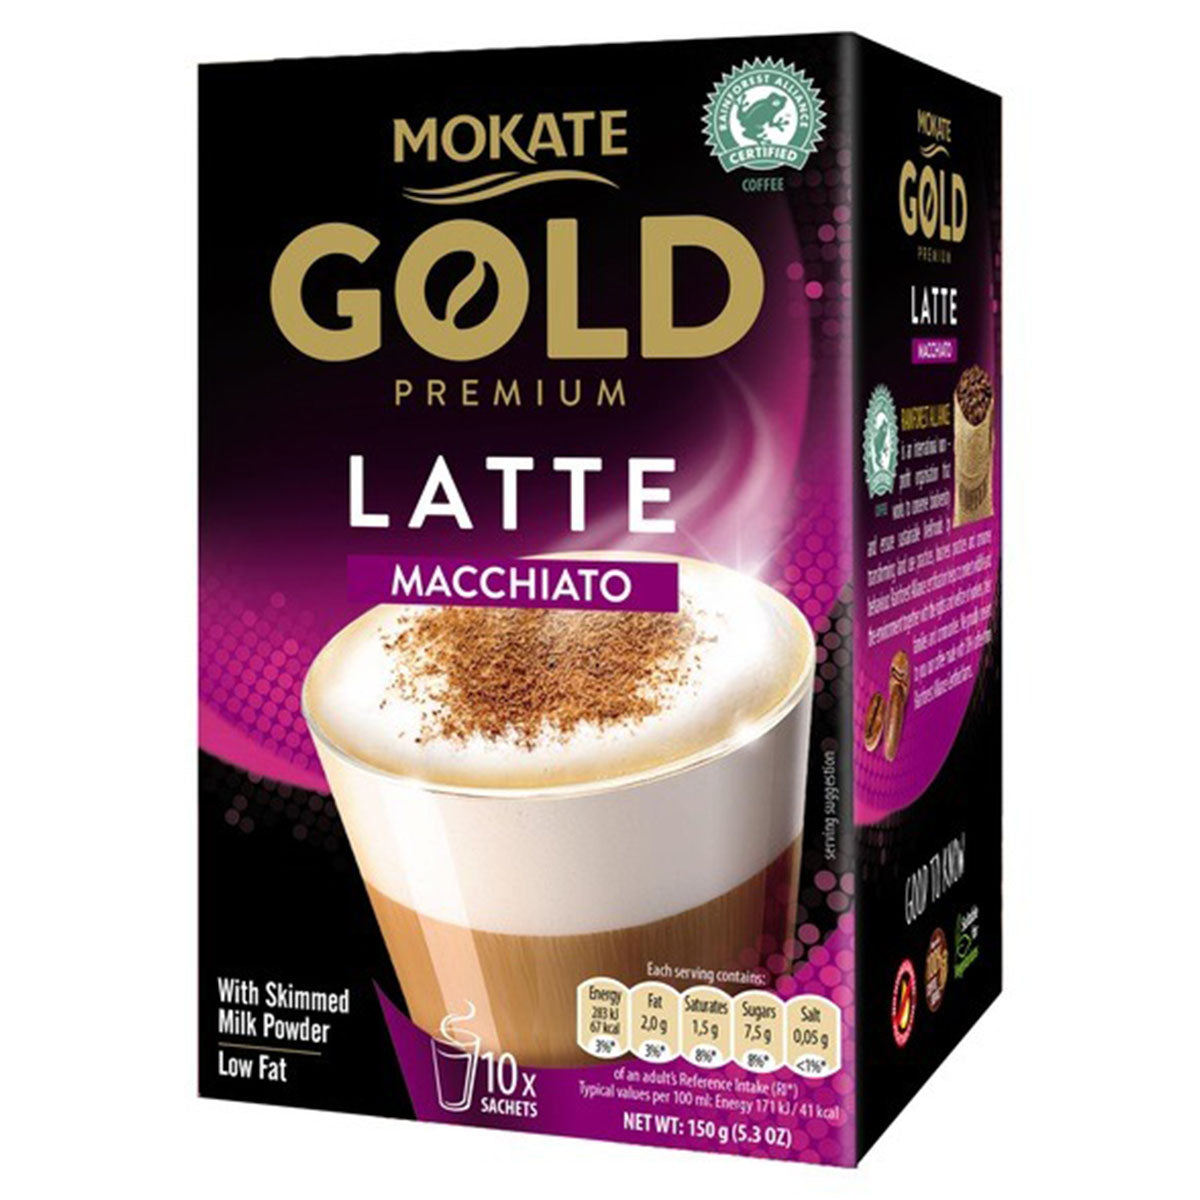 Mokate - Gold Premium Latte Machiato - 140g - Continental Food Store